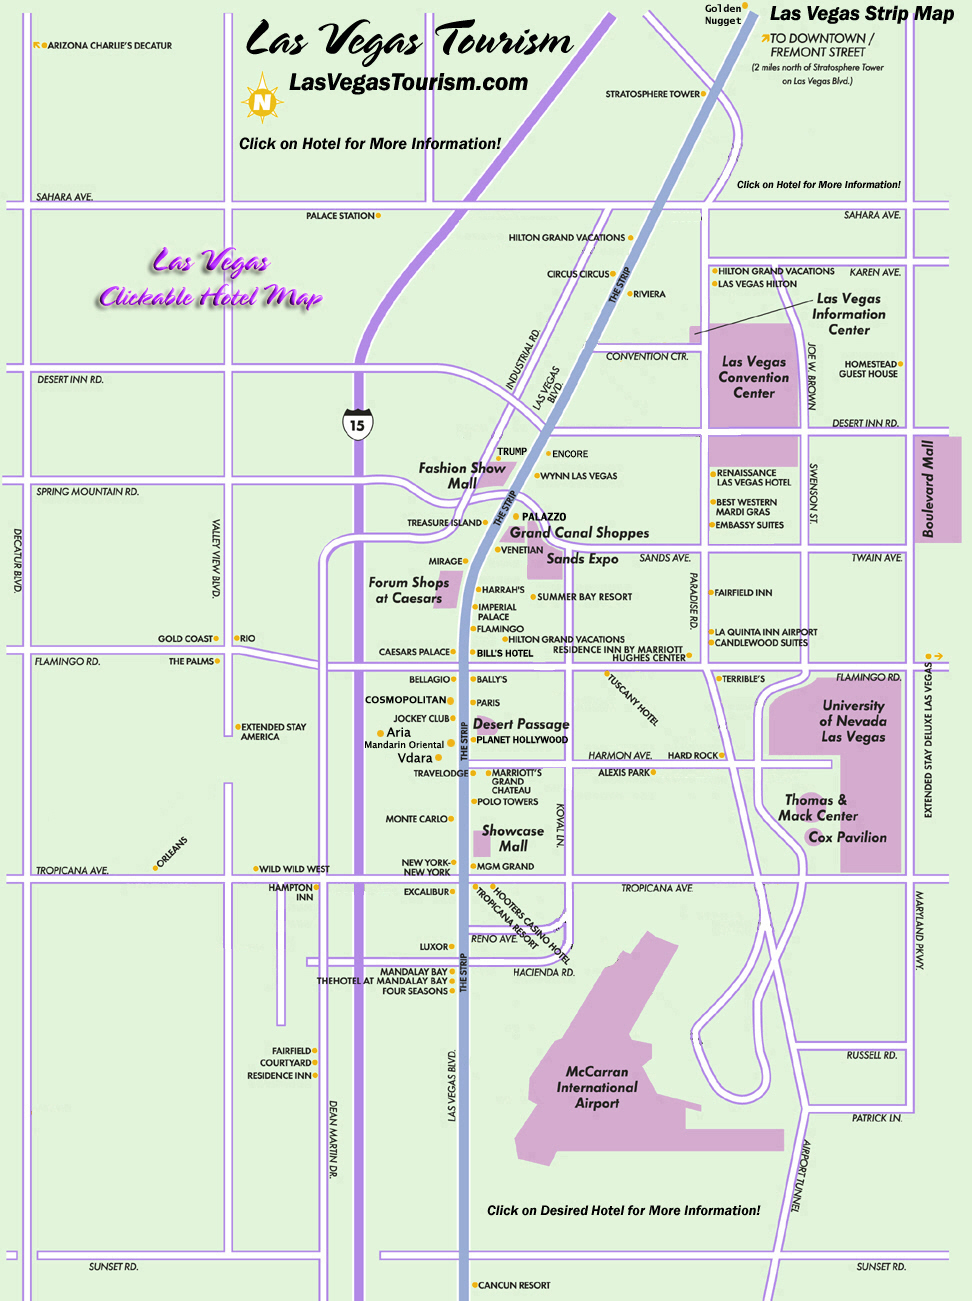 Las Vegas Map, Official Site - Las Vegas Strip Map - Printable Las Vegas Strip Map 2017